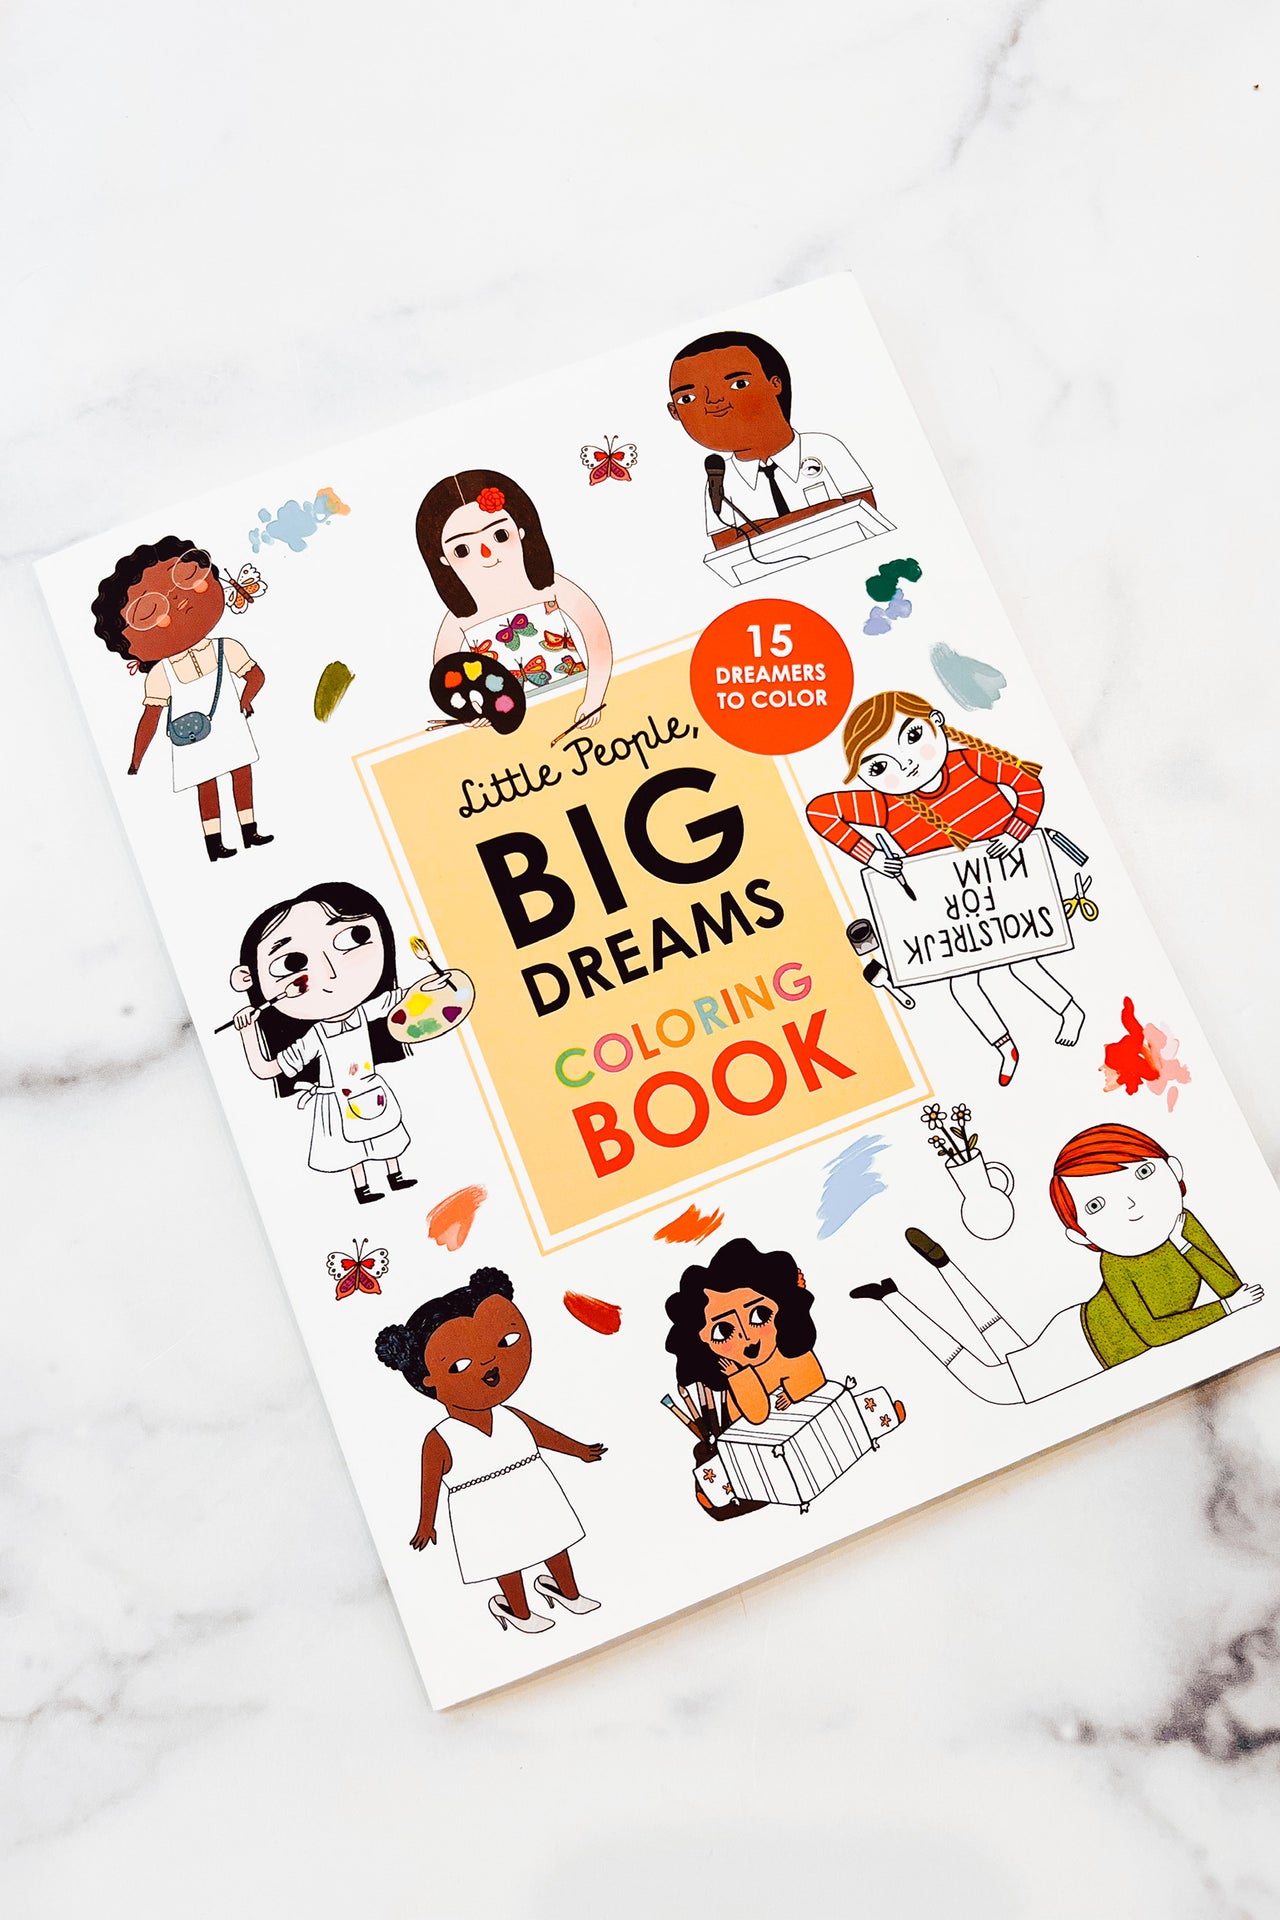 Little People, Big Dreams Coloring Book